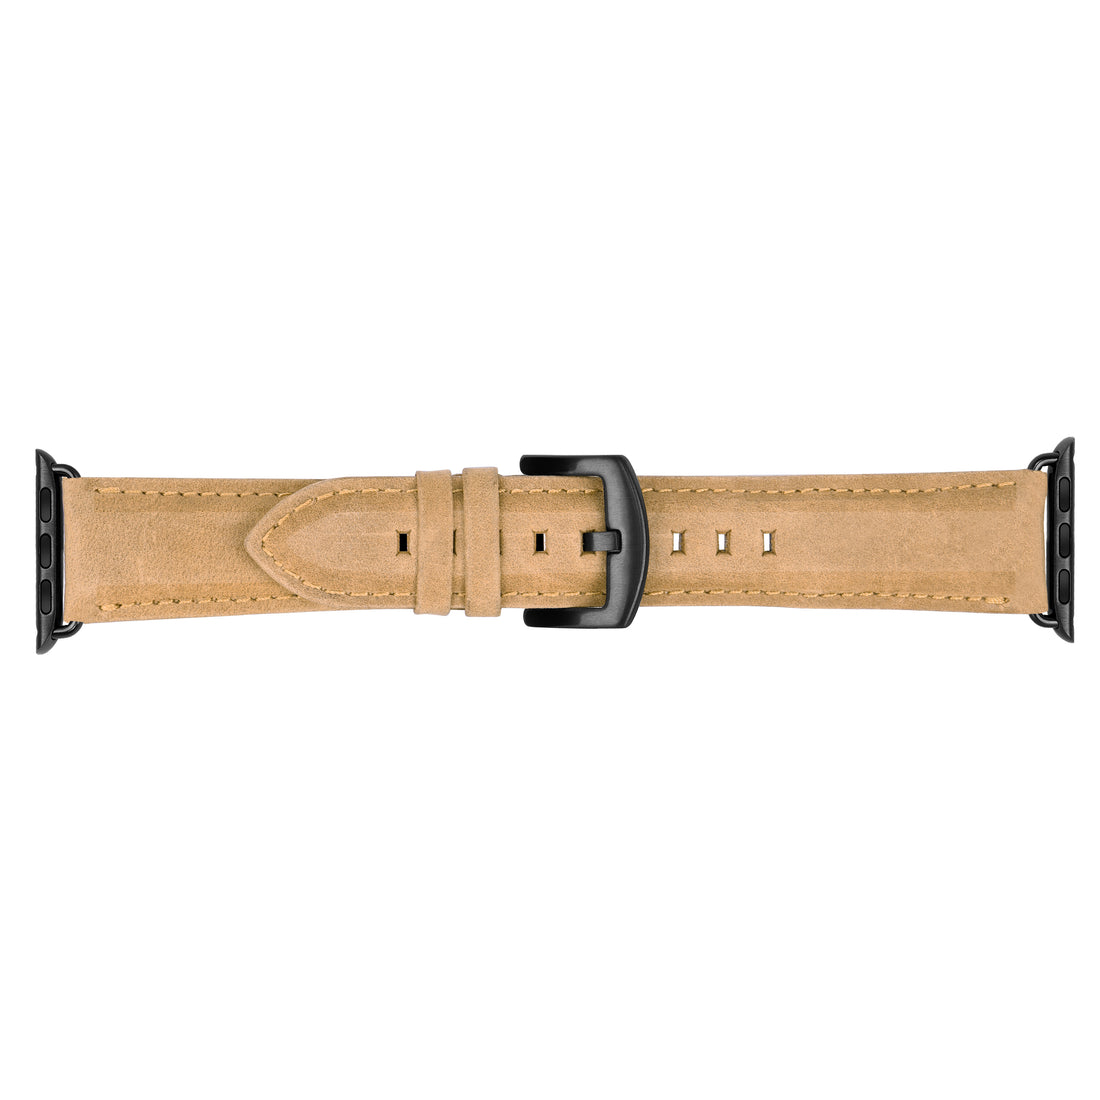 Encantar Leather Apple Watch Strap - 38 mm / 40 mm - Natural Camel Colour